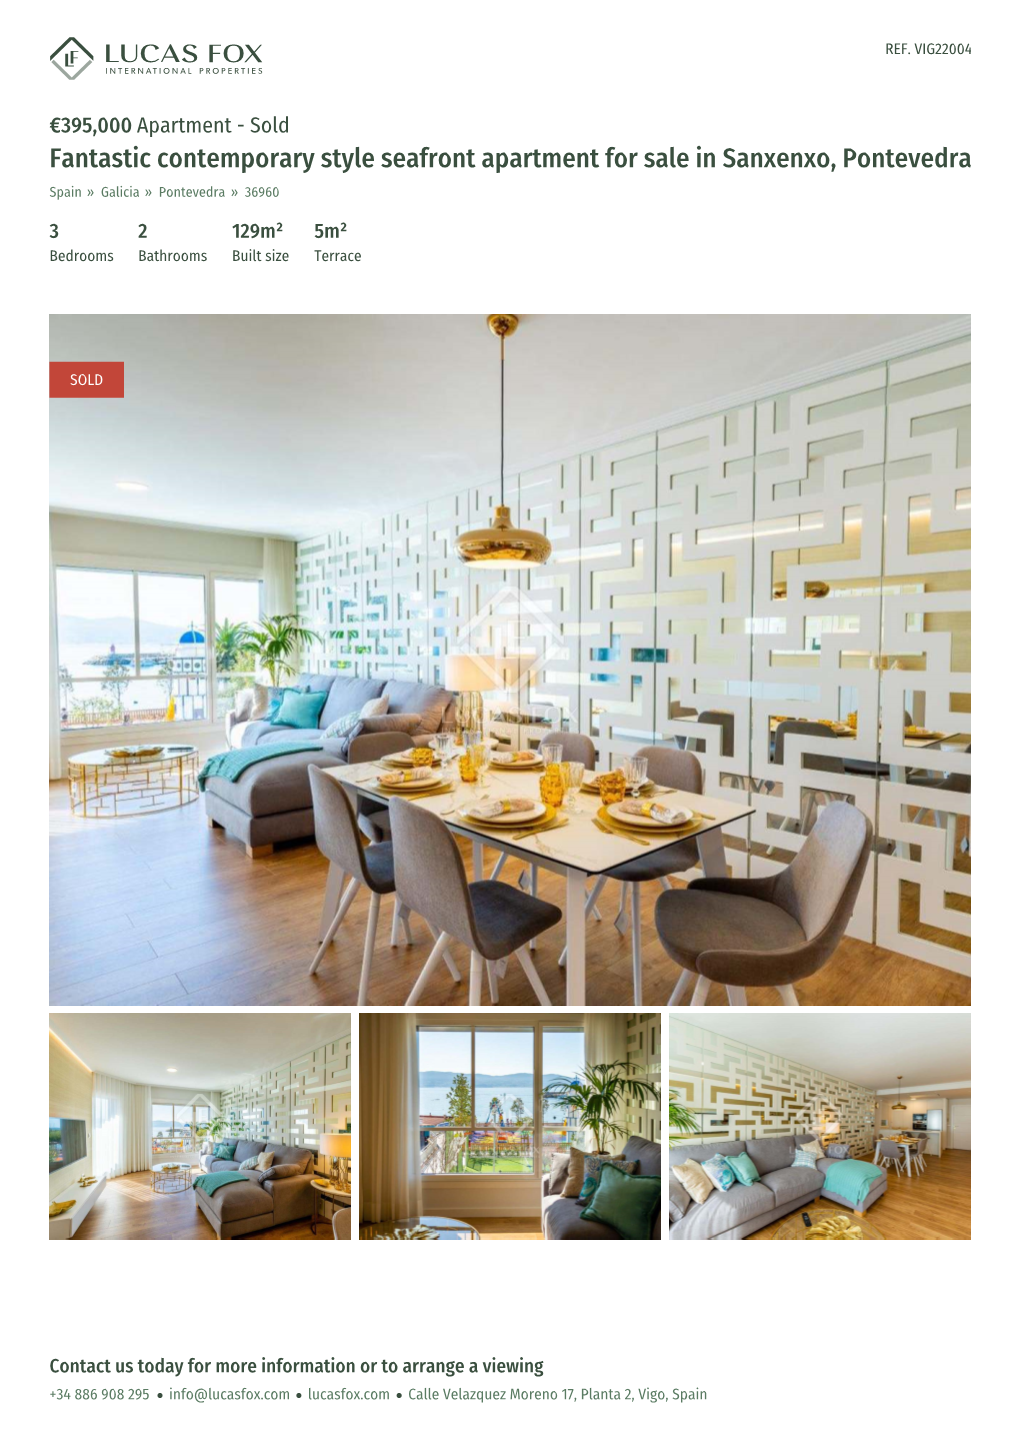 Fantastic Contemporary Style Seafront Apartment for Sale in Sanxenxo, Pontevedra Spain » Galicia » Pontevedra » 36960